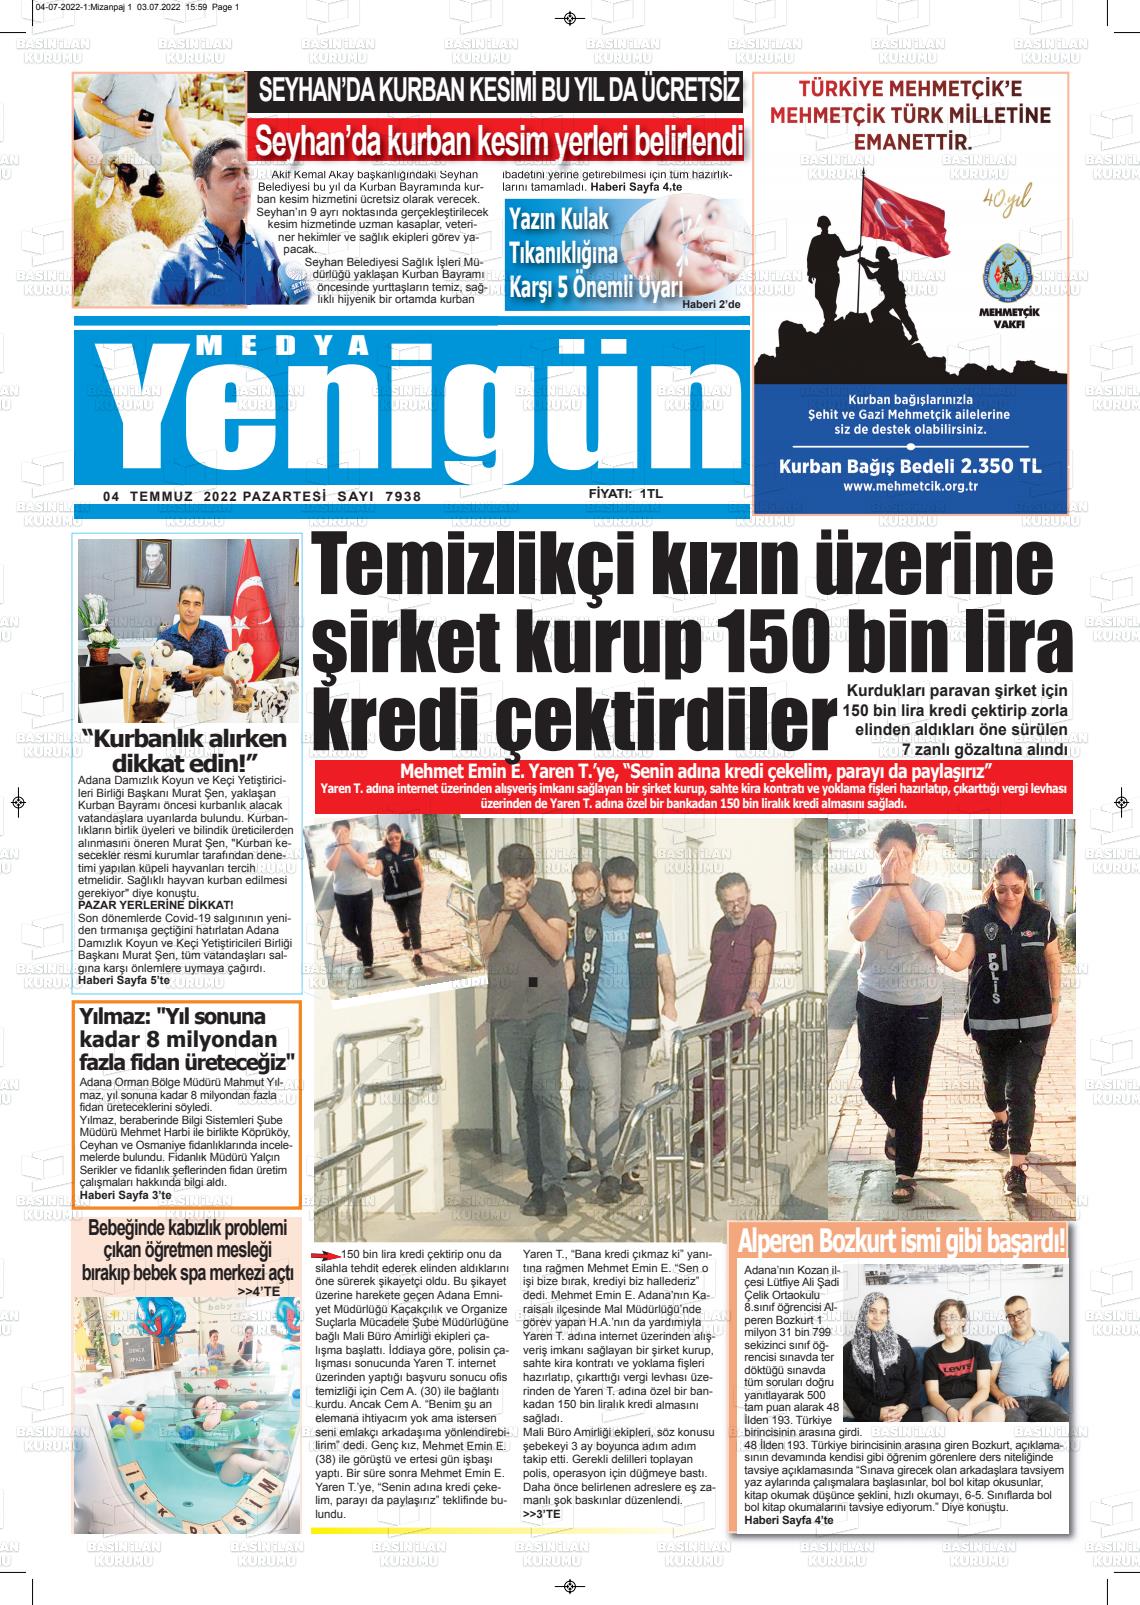 04 Temmuz 2022 Medya Yenigün Gazete Manşeti